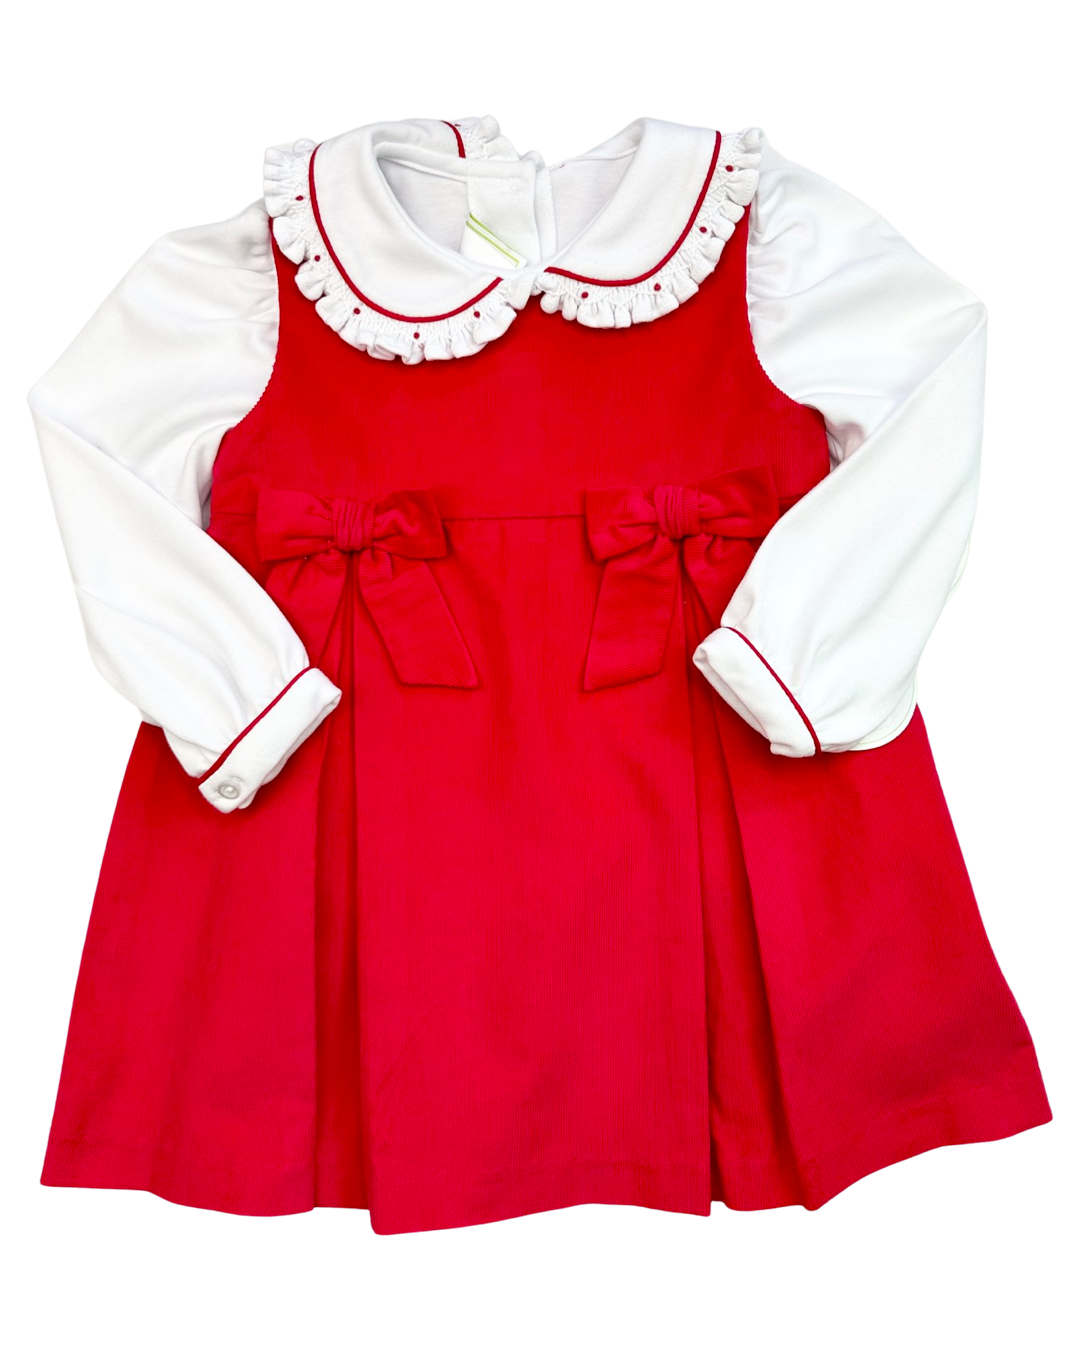 Windsor Jumper Dress - Red Cord (3T)